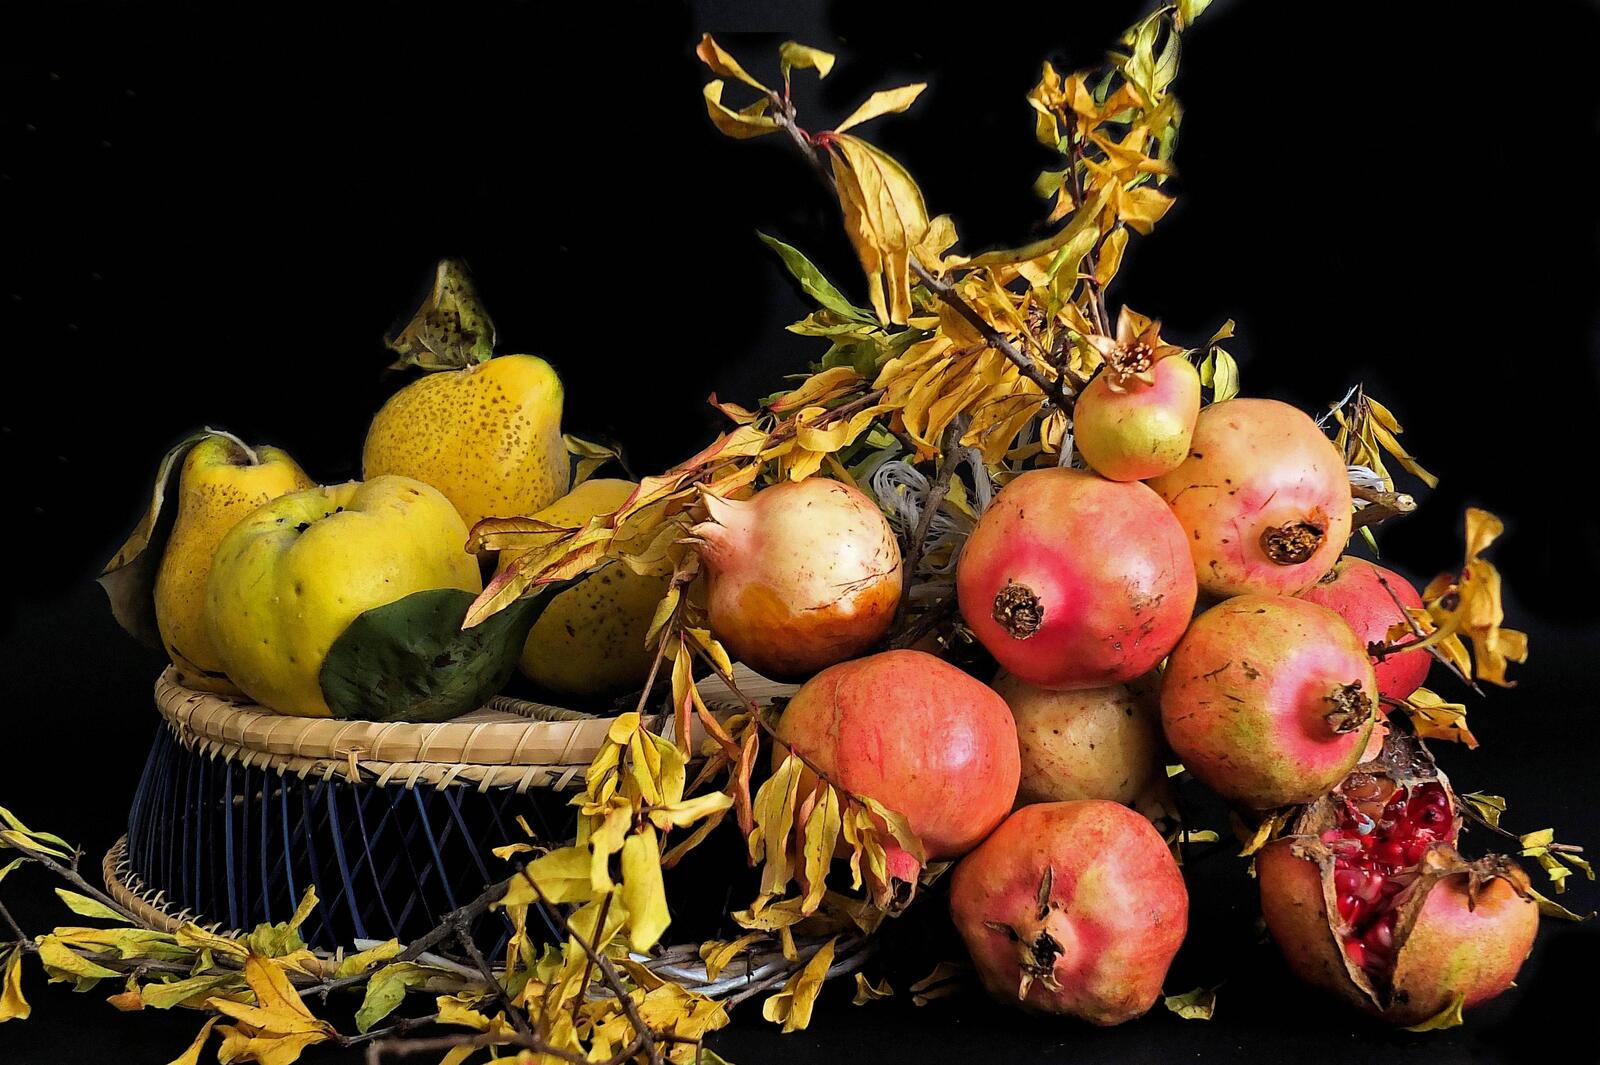 Wallpapers fruit pomegranate apples on the desktop